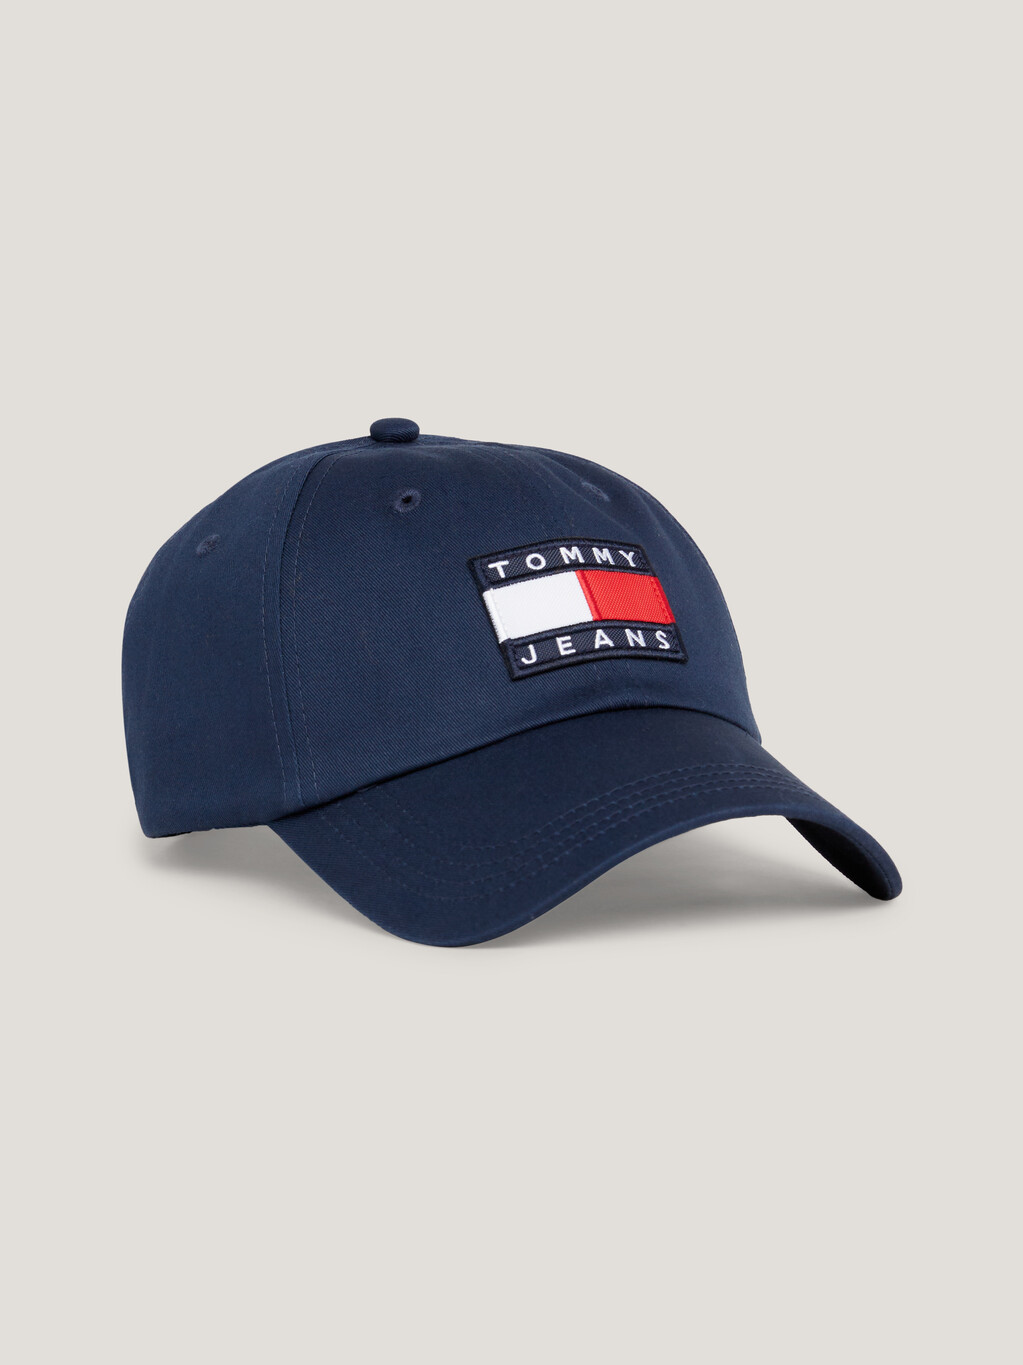 Heritage 經典棒球帽, Twilight Navy, hi-res